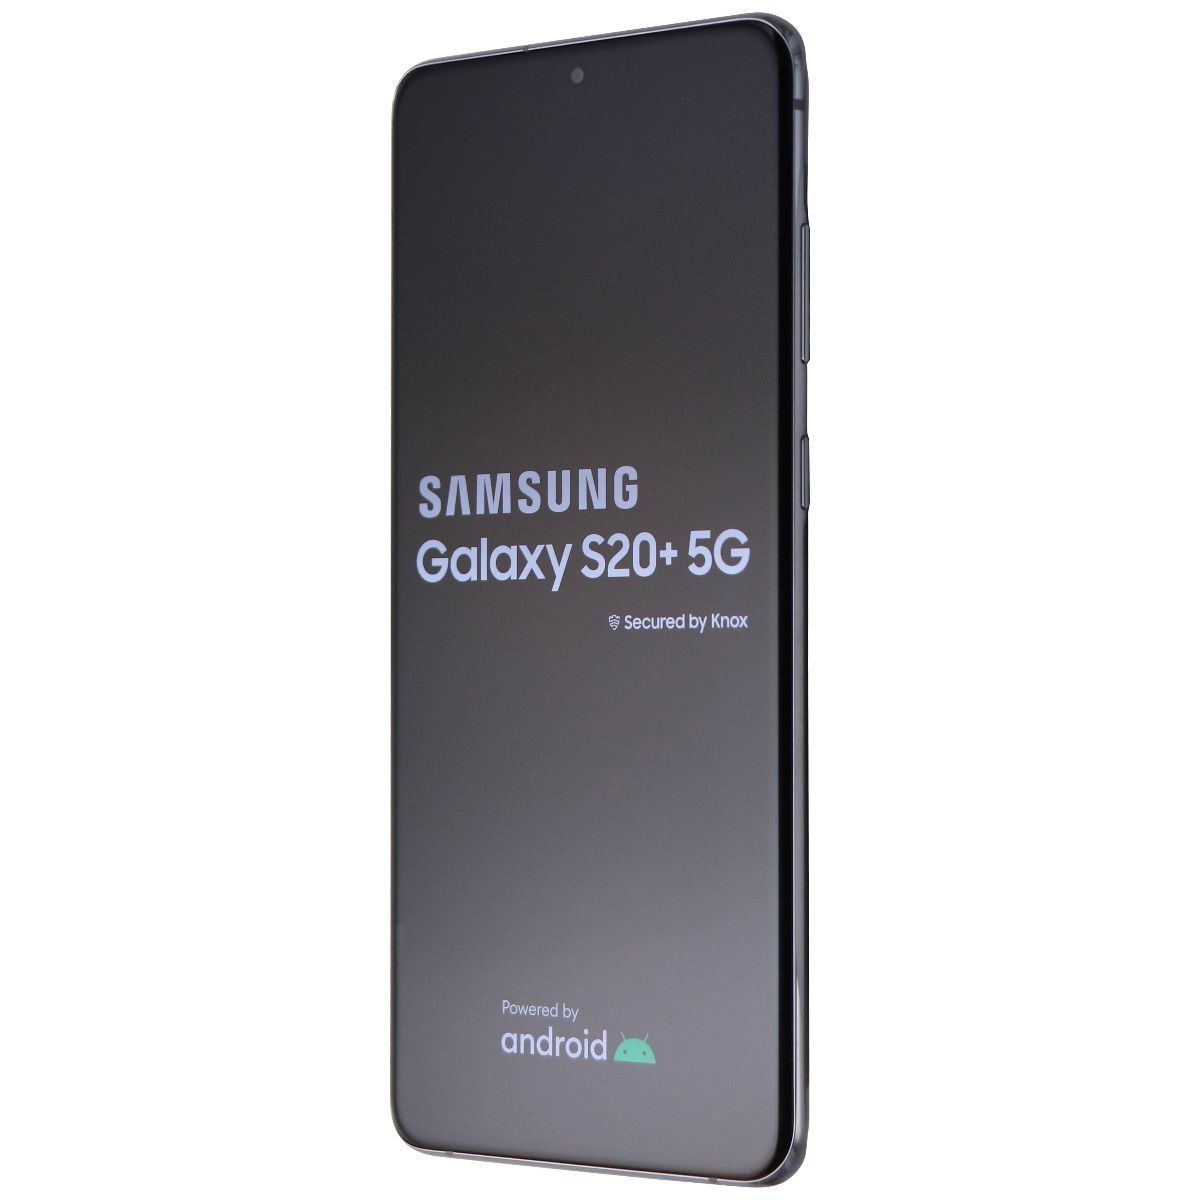 Samsung Galaxy S20+ 5G (6.7-in) (SM-G986U) Unlocked - 128GB/Cosmic Gray Cell Phones & Smartphones Samsung    - Simple Cell Bulk Wholesale Pricing - USA Seller